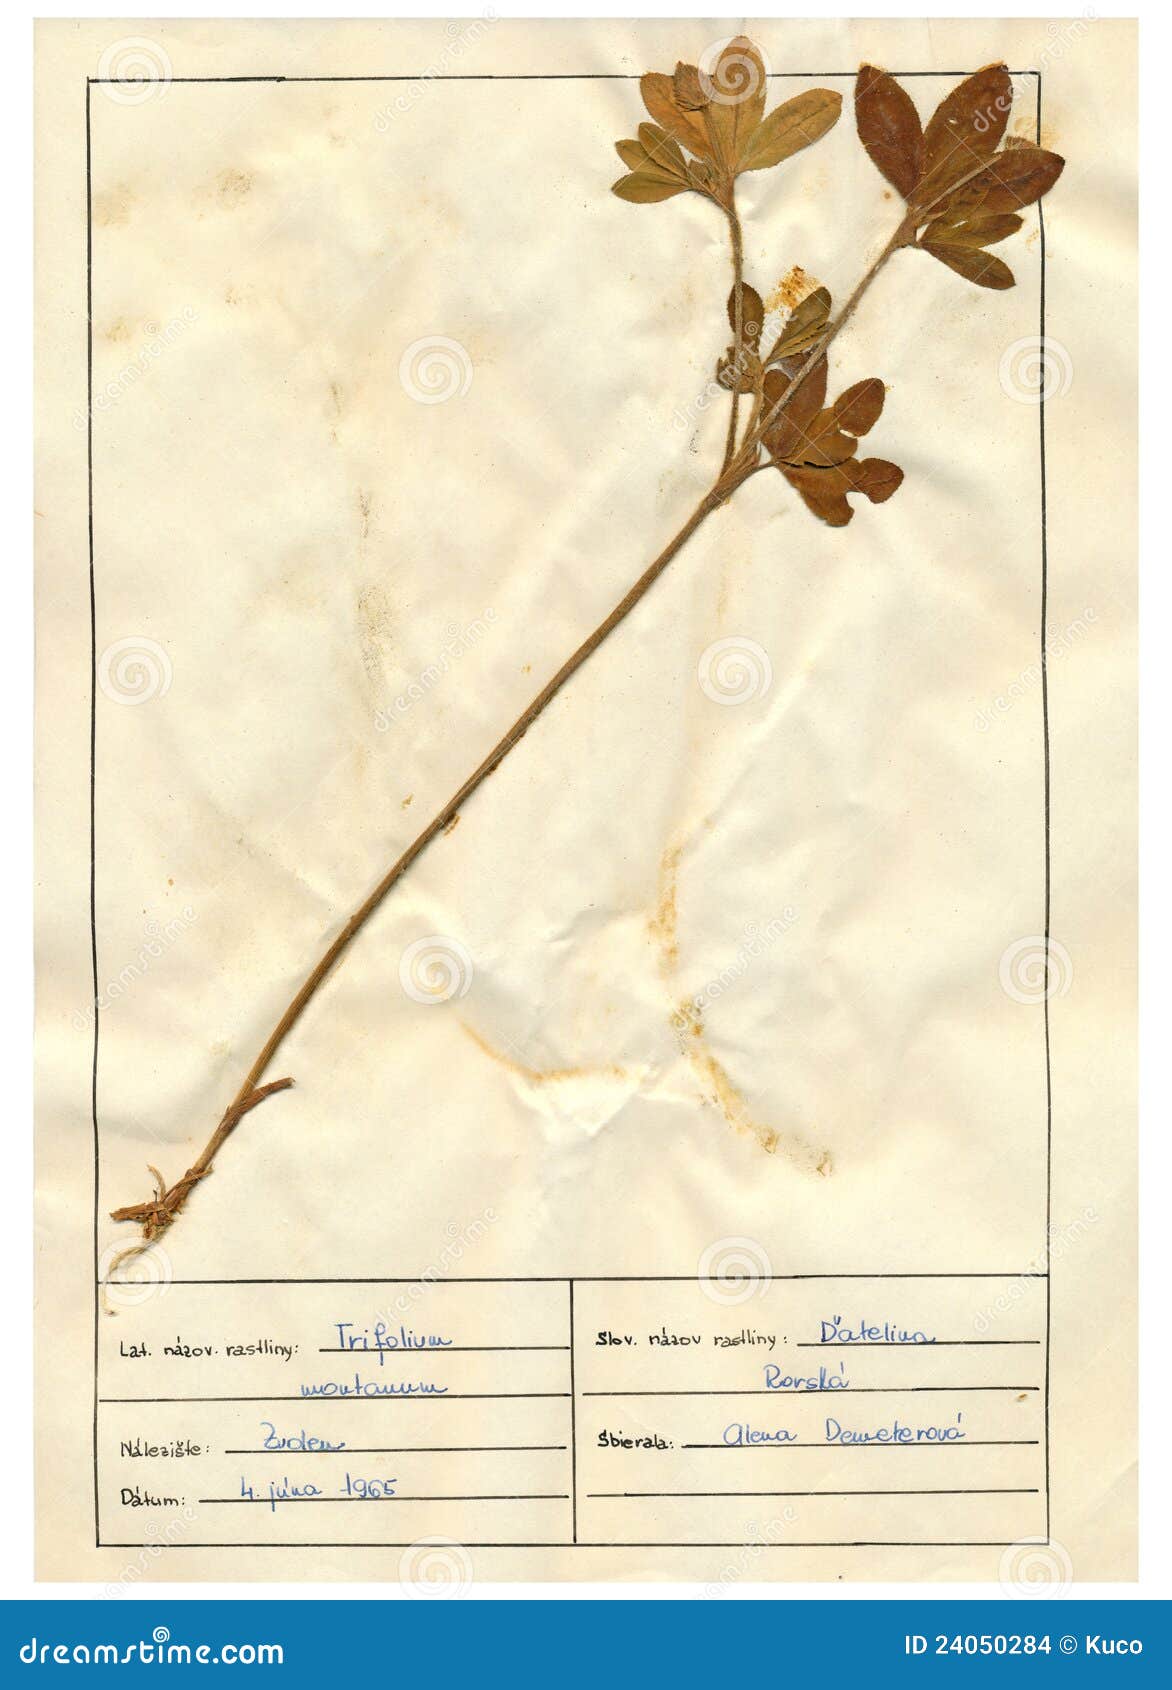 herbarium sheet - 7/30